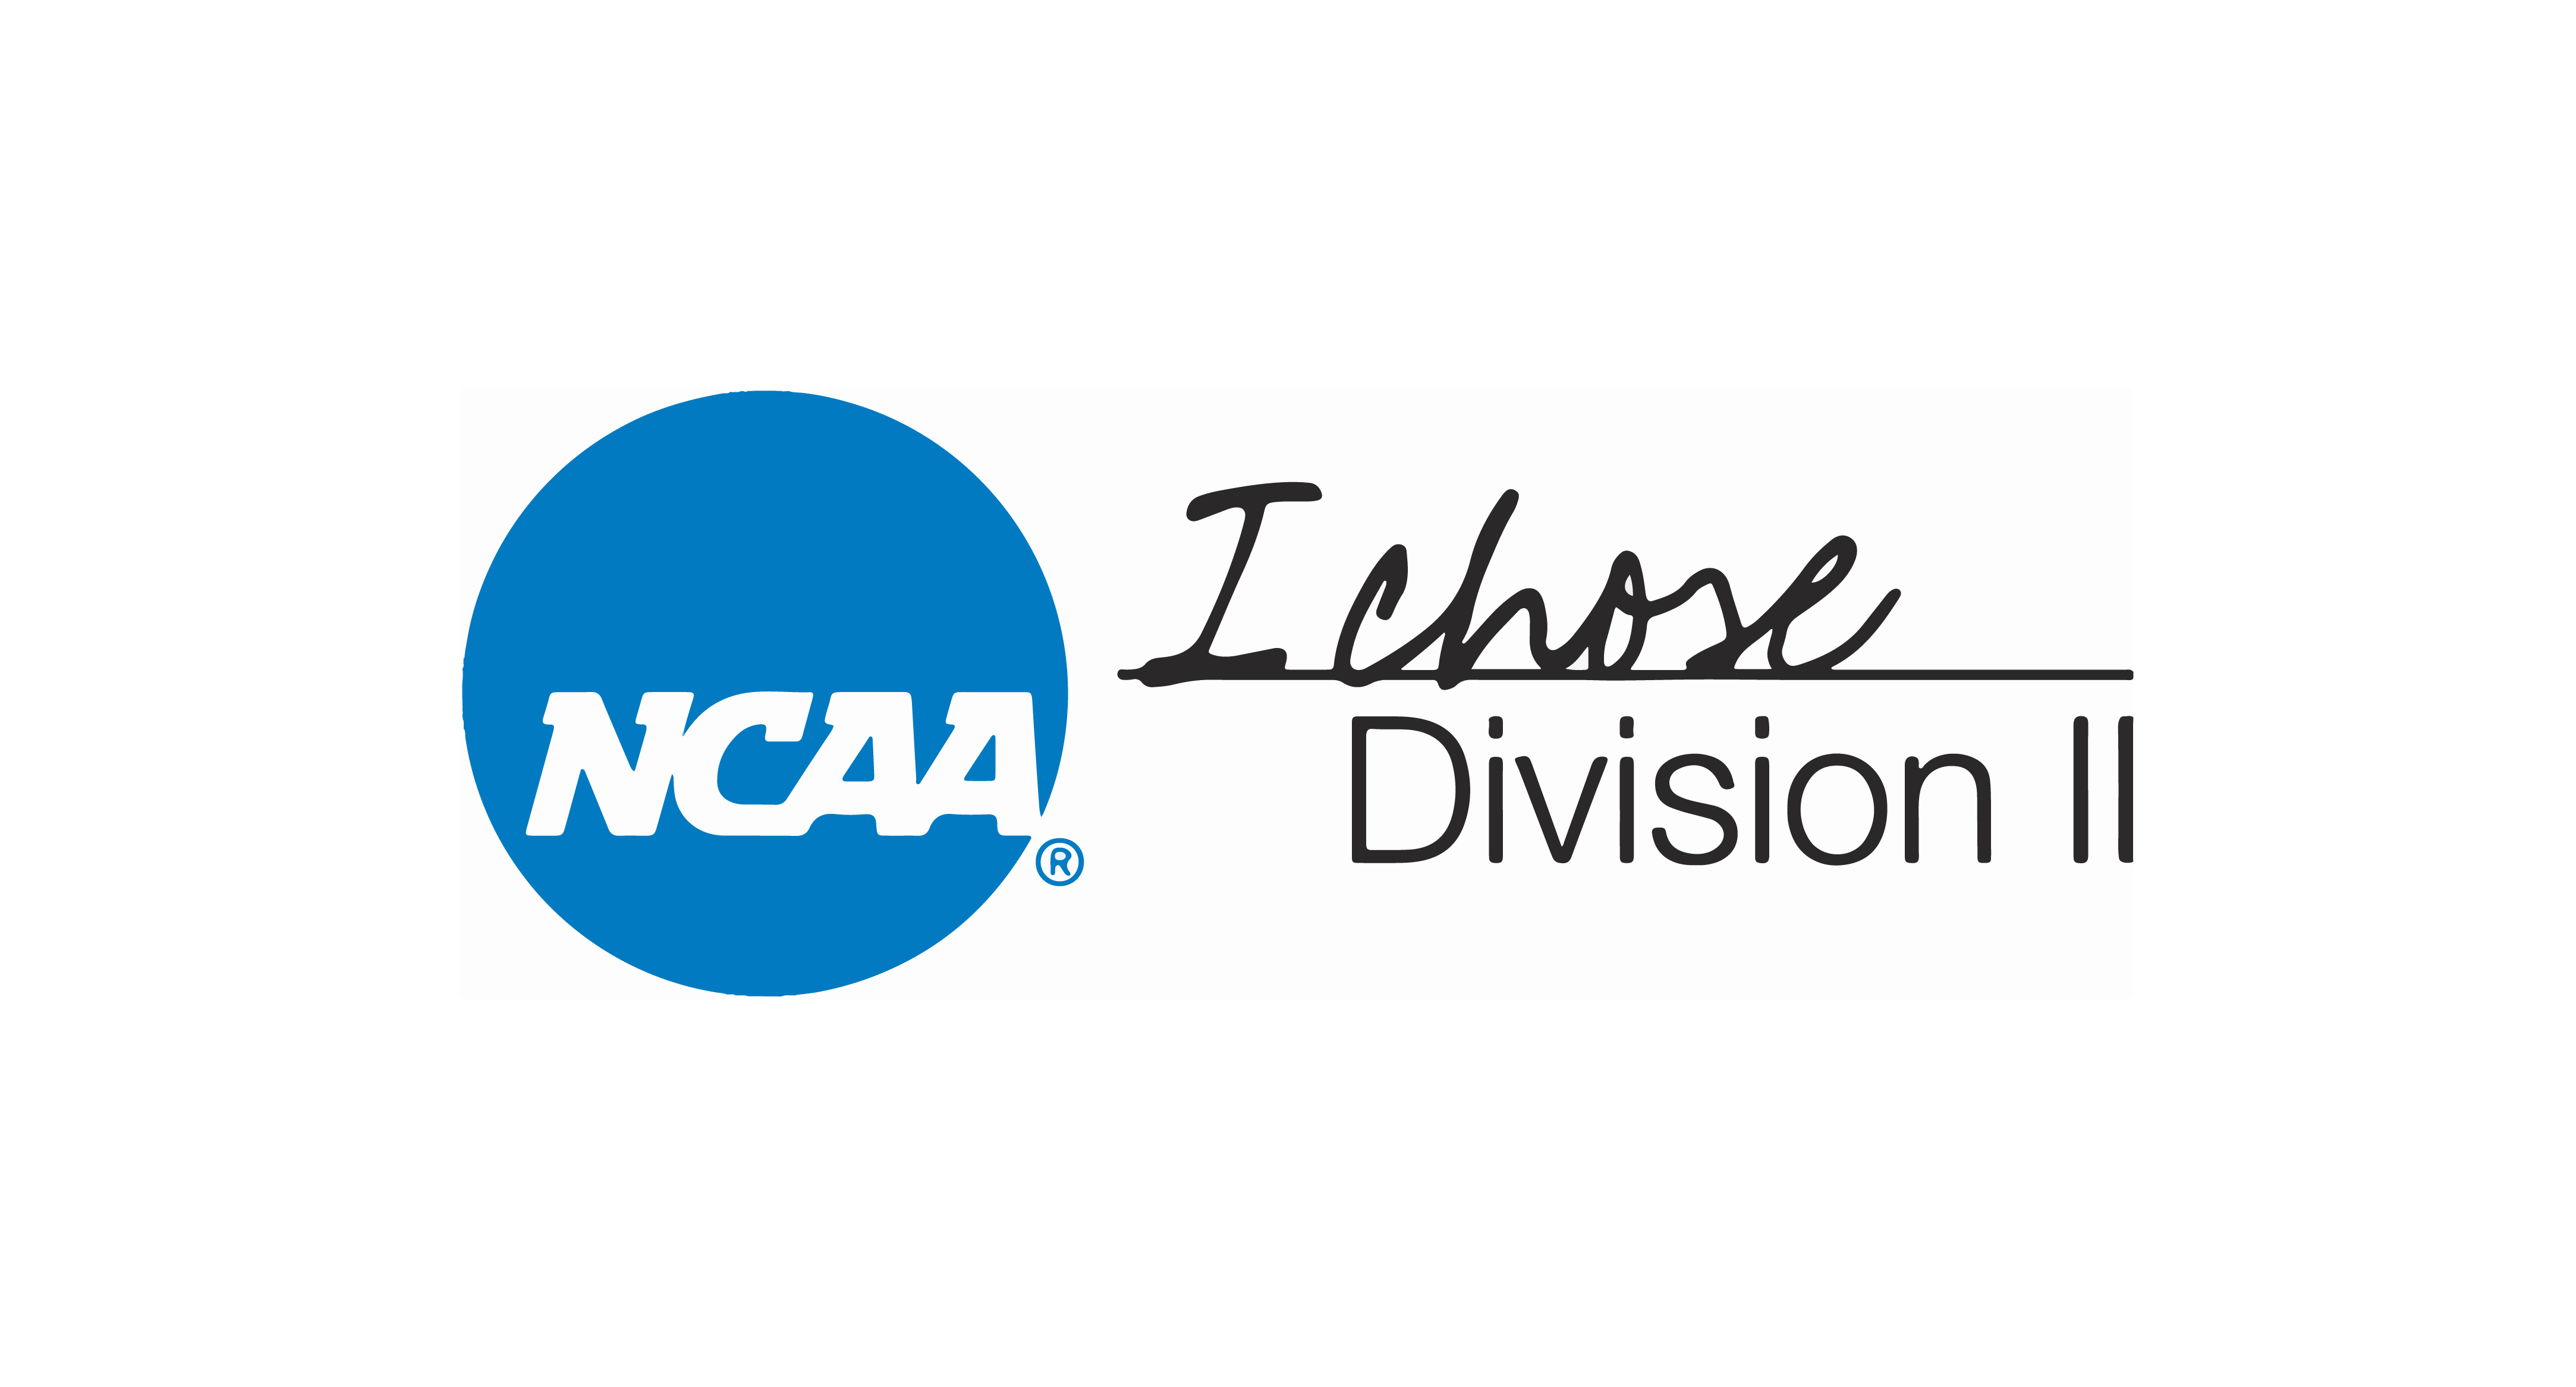 NCAA Division II focuses on balance of academics and athletics